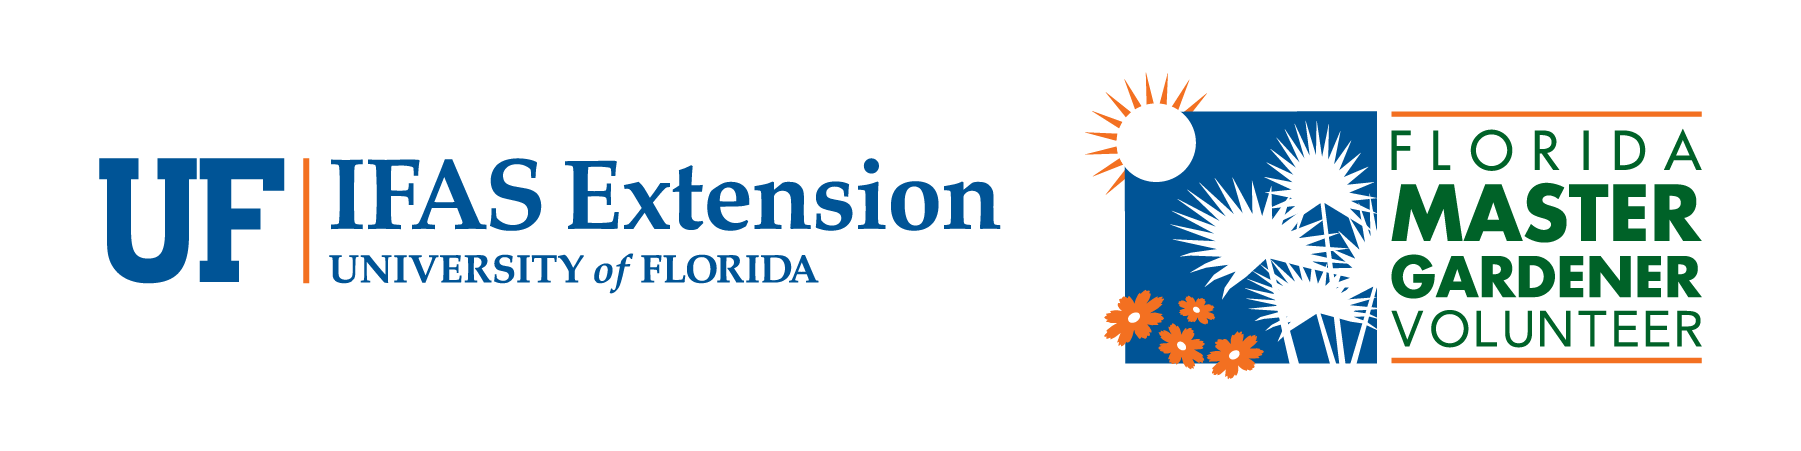 Gardener Logo - Florida Master Gardener Volunteer Program Logos - University of ...